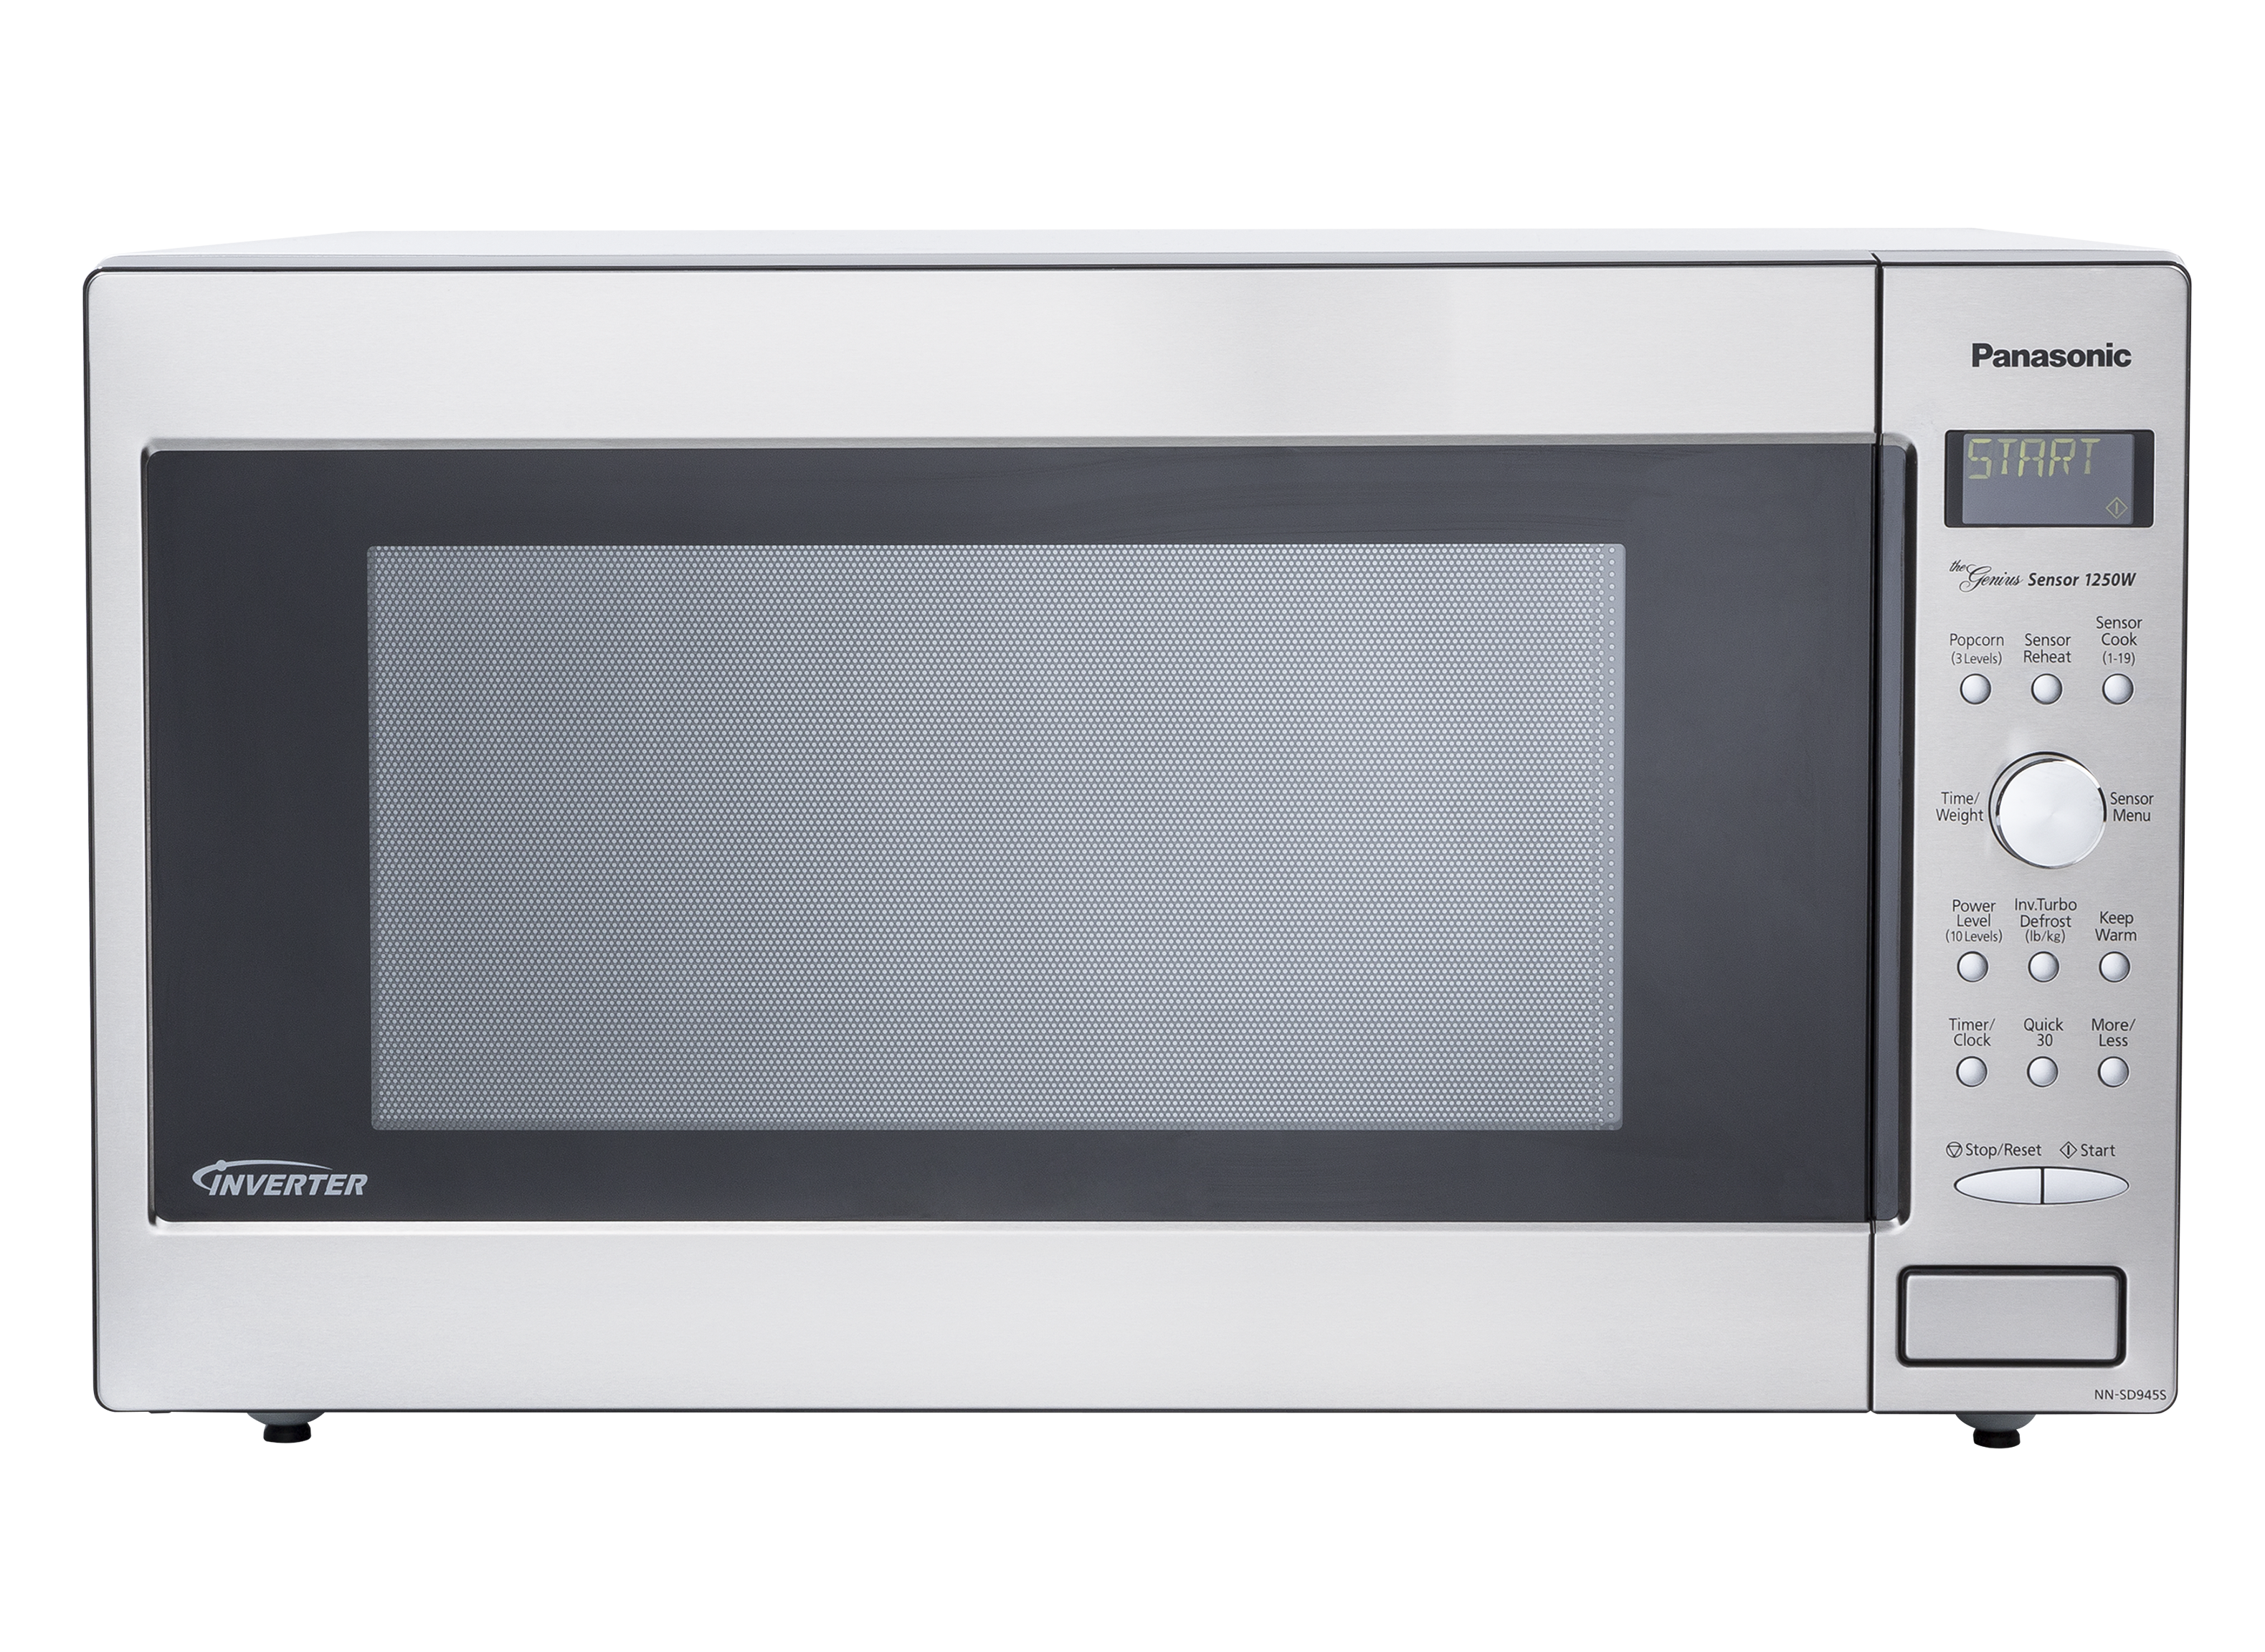 Panasonic Microwave Oven NN-SD945S Stainless Steel Countertop